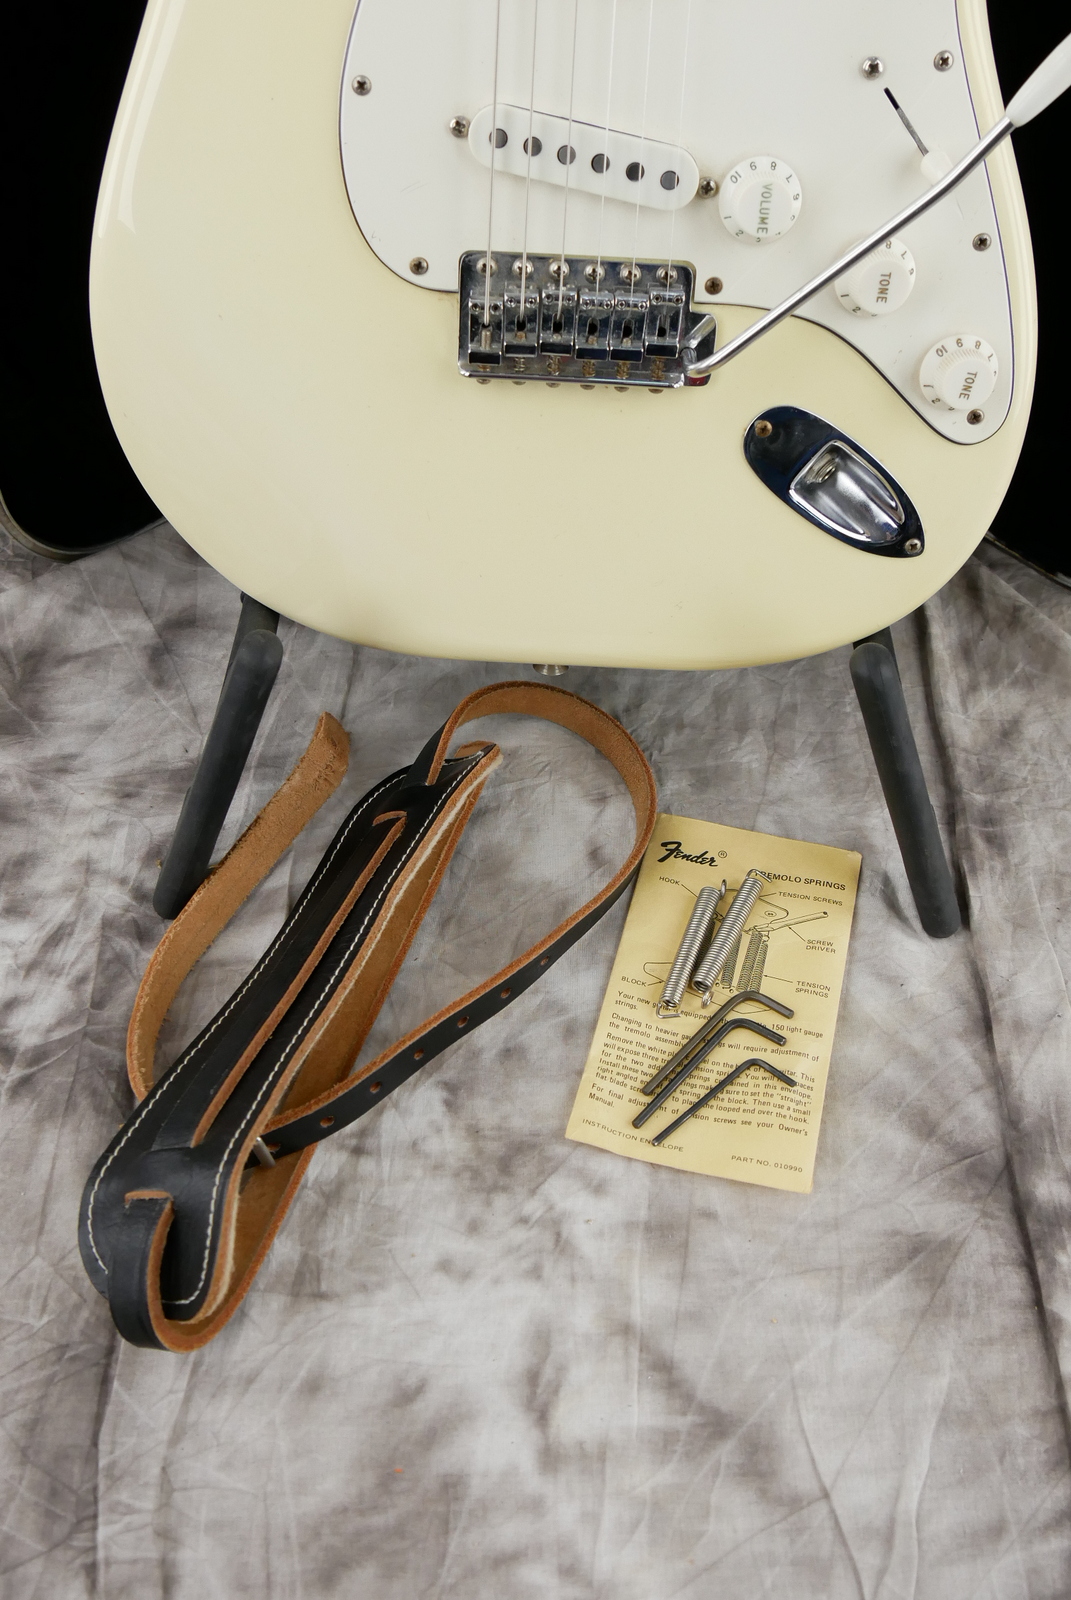 Fender_Stratocaster_Dan_smith_1982_tremolo_hardcase-014.JPG